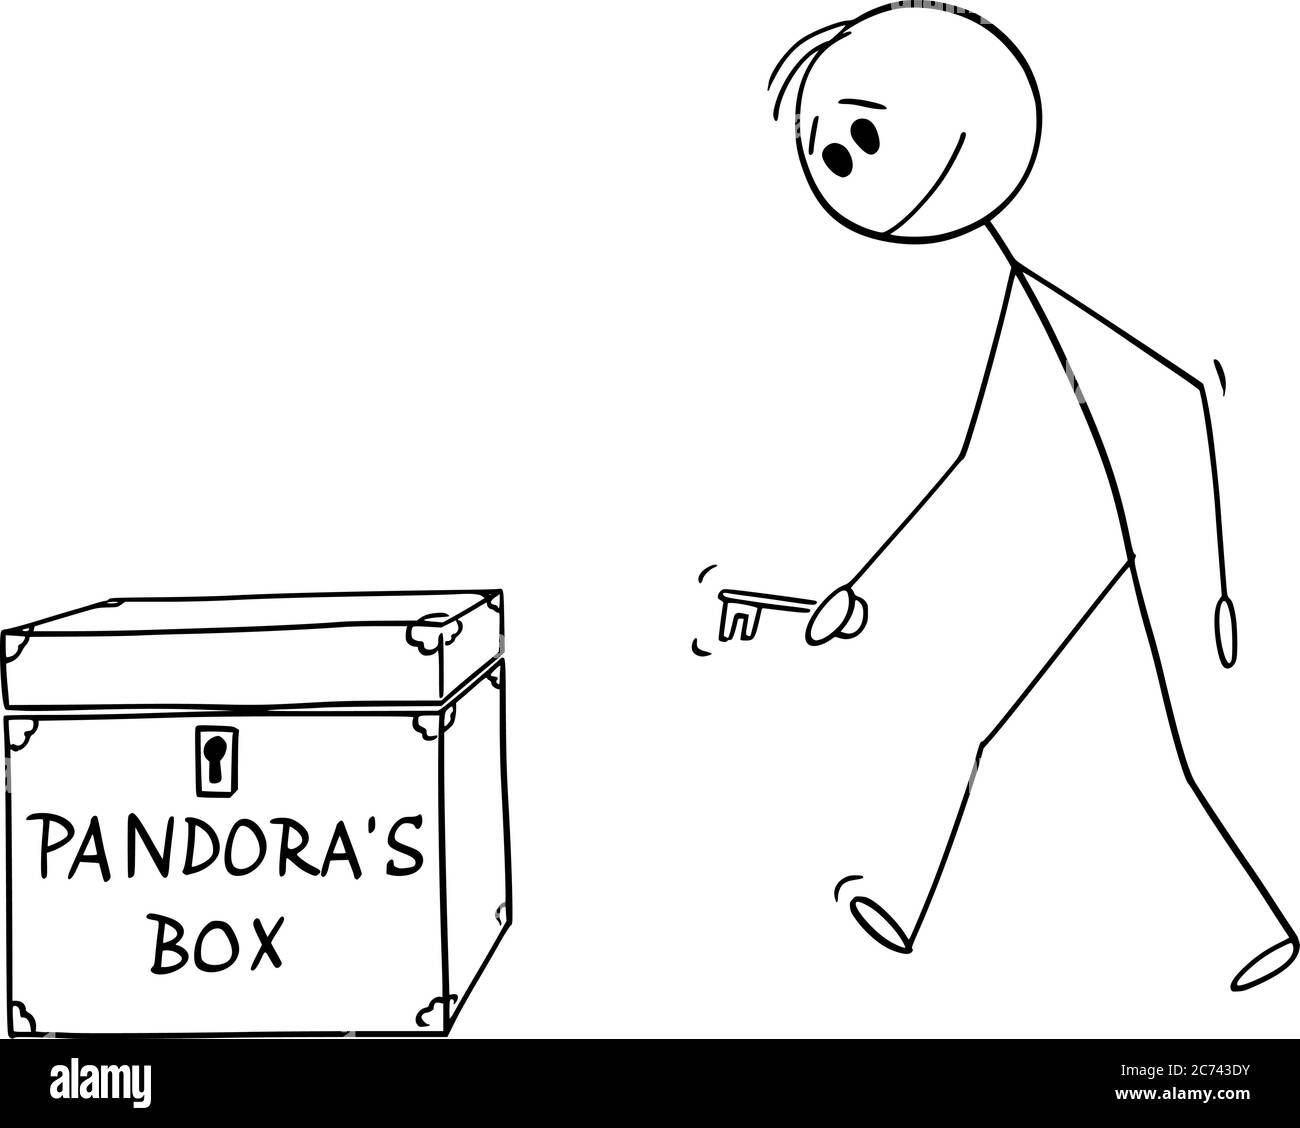 Pandora Box Images – Browse 1,333 Stock Photos, Vectors, and Video